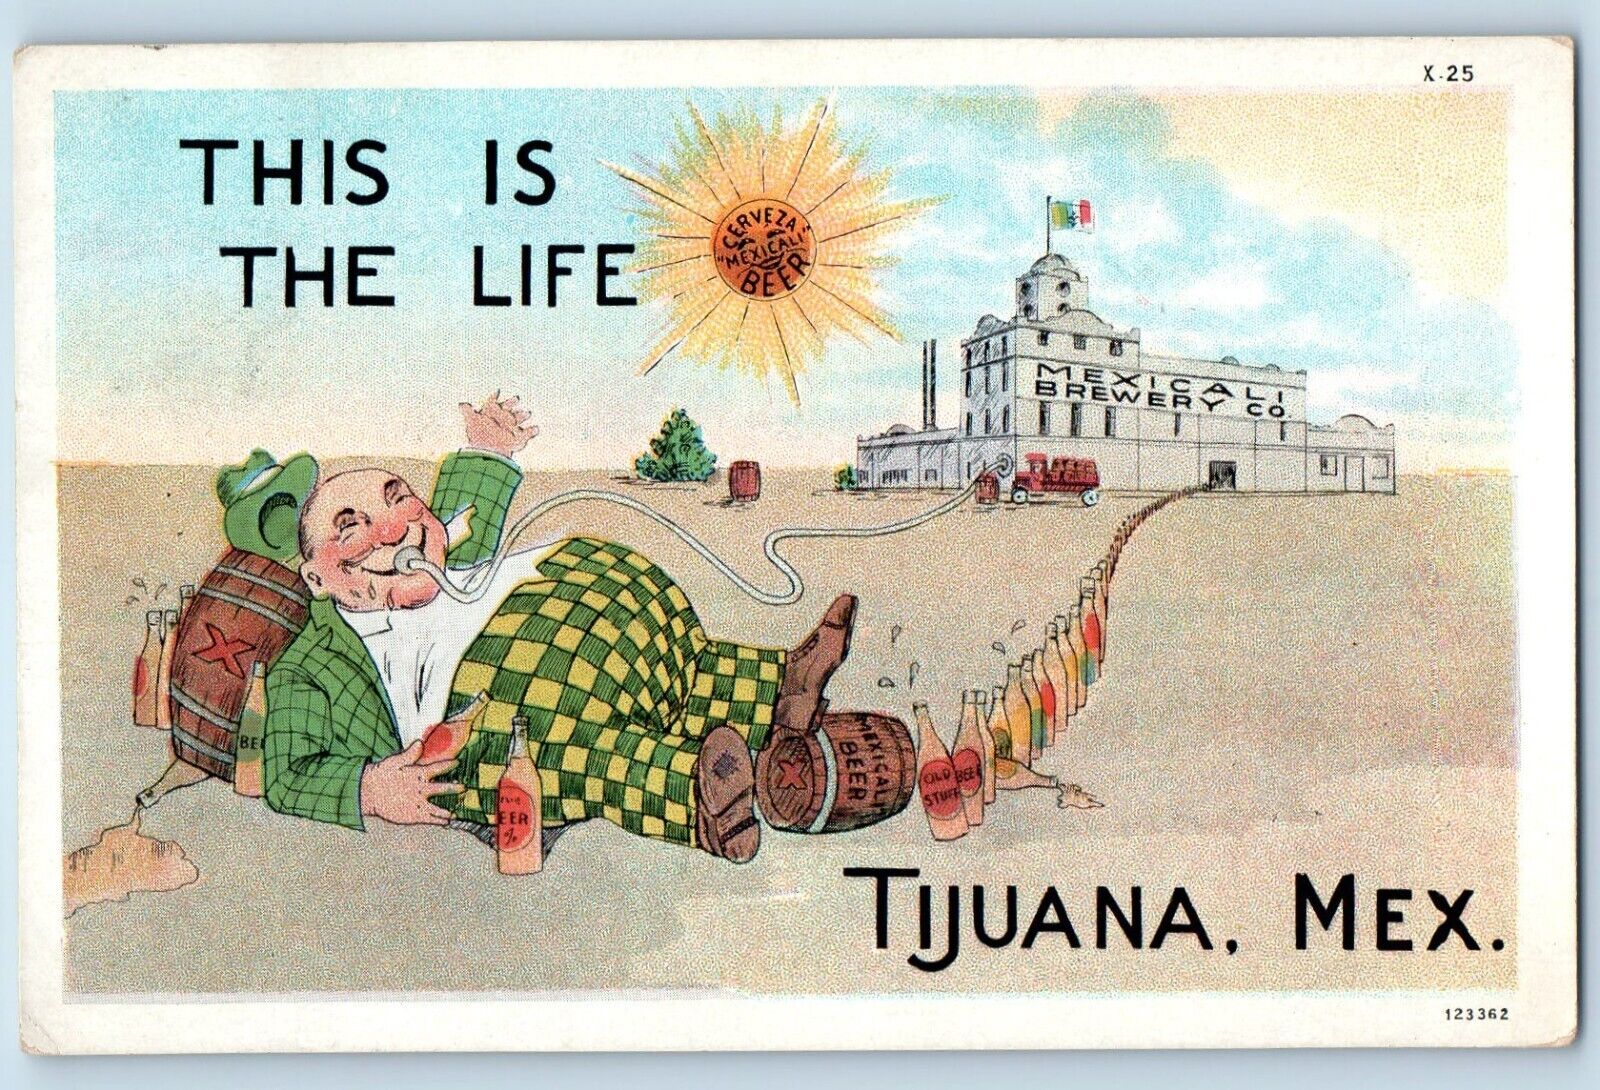 Tijuana Baja California Mexico Postcard Sun Mexicali Brewery Co. c1930's Comic